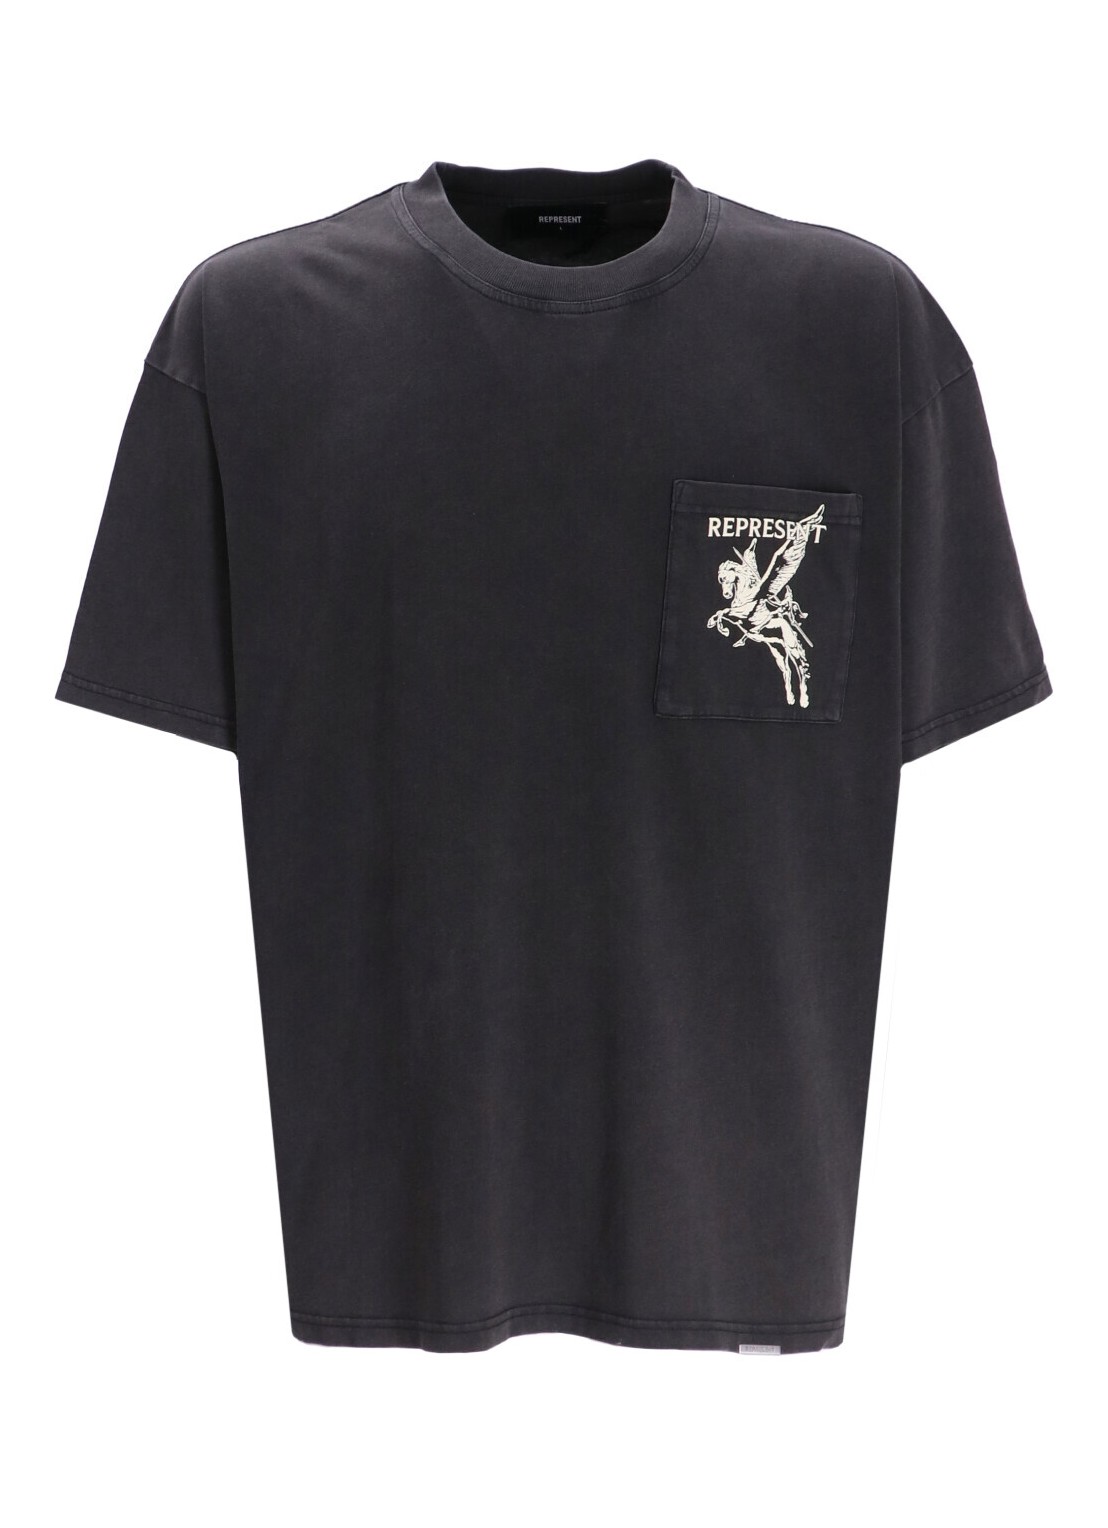 Camiseta represent t-shirt man power and speed t-shirt mt4024 20 talla L
 